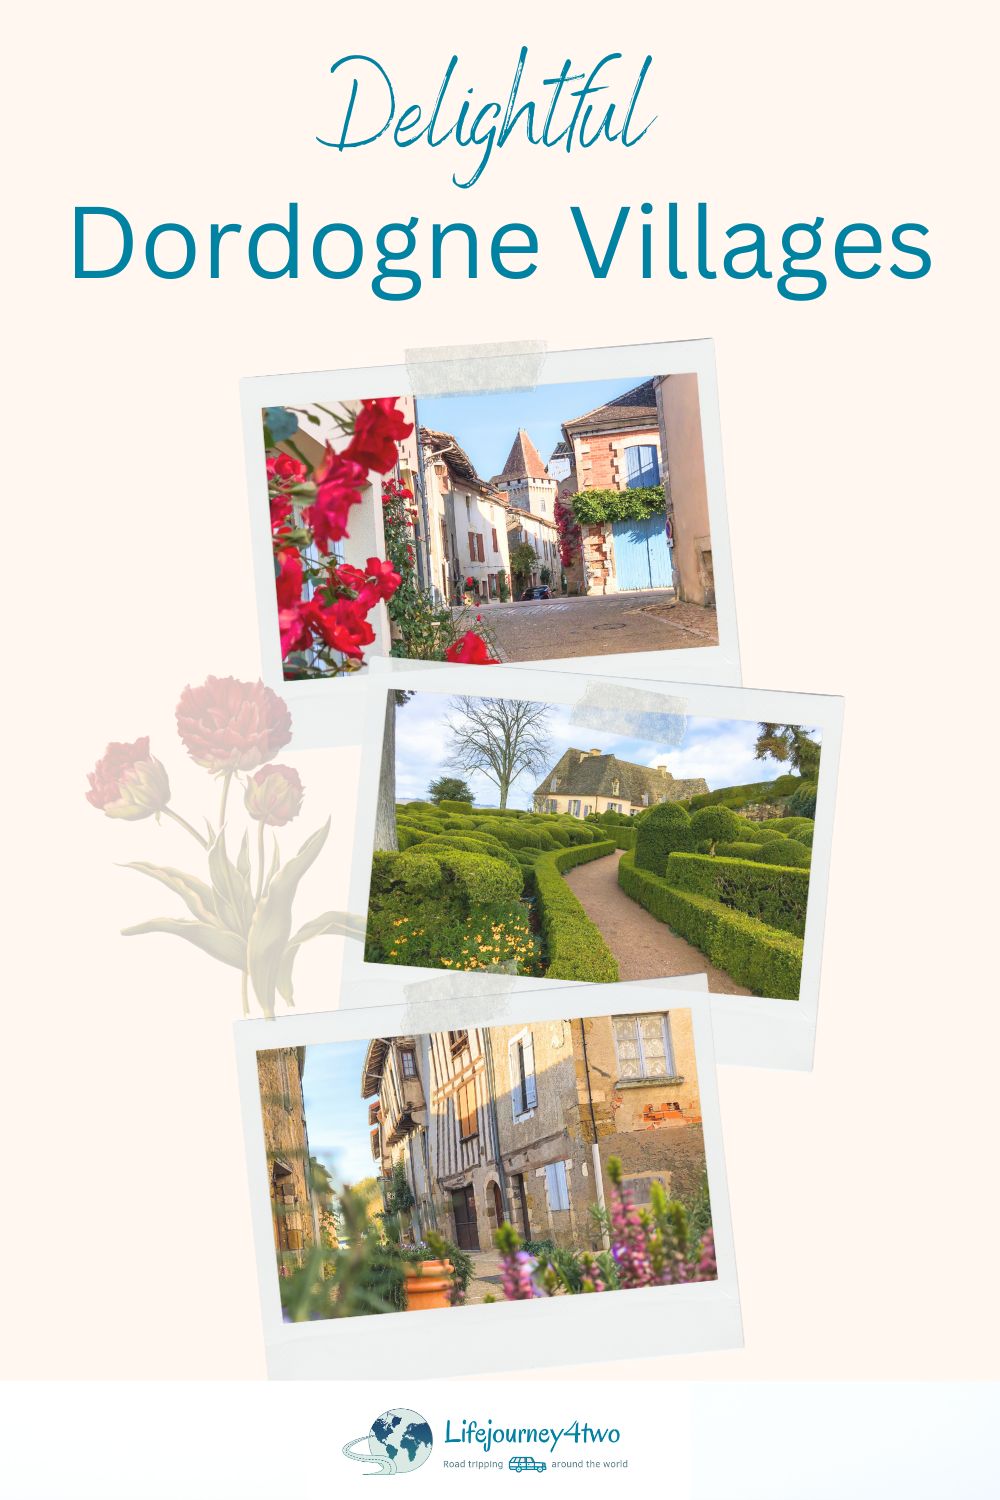 Dordogne Villages Pinterest pin